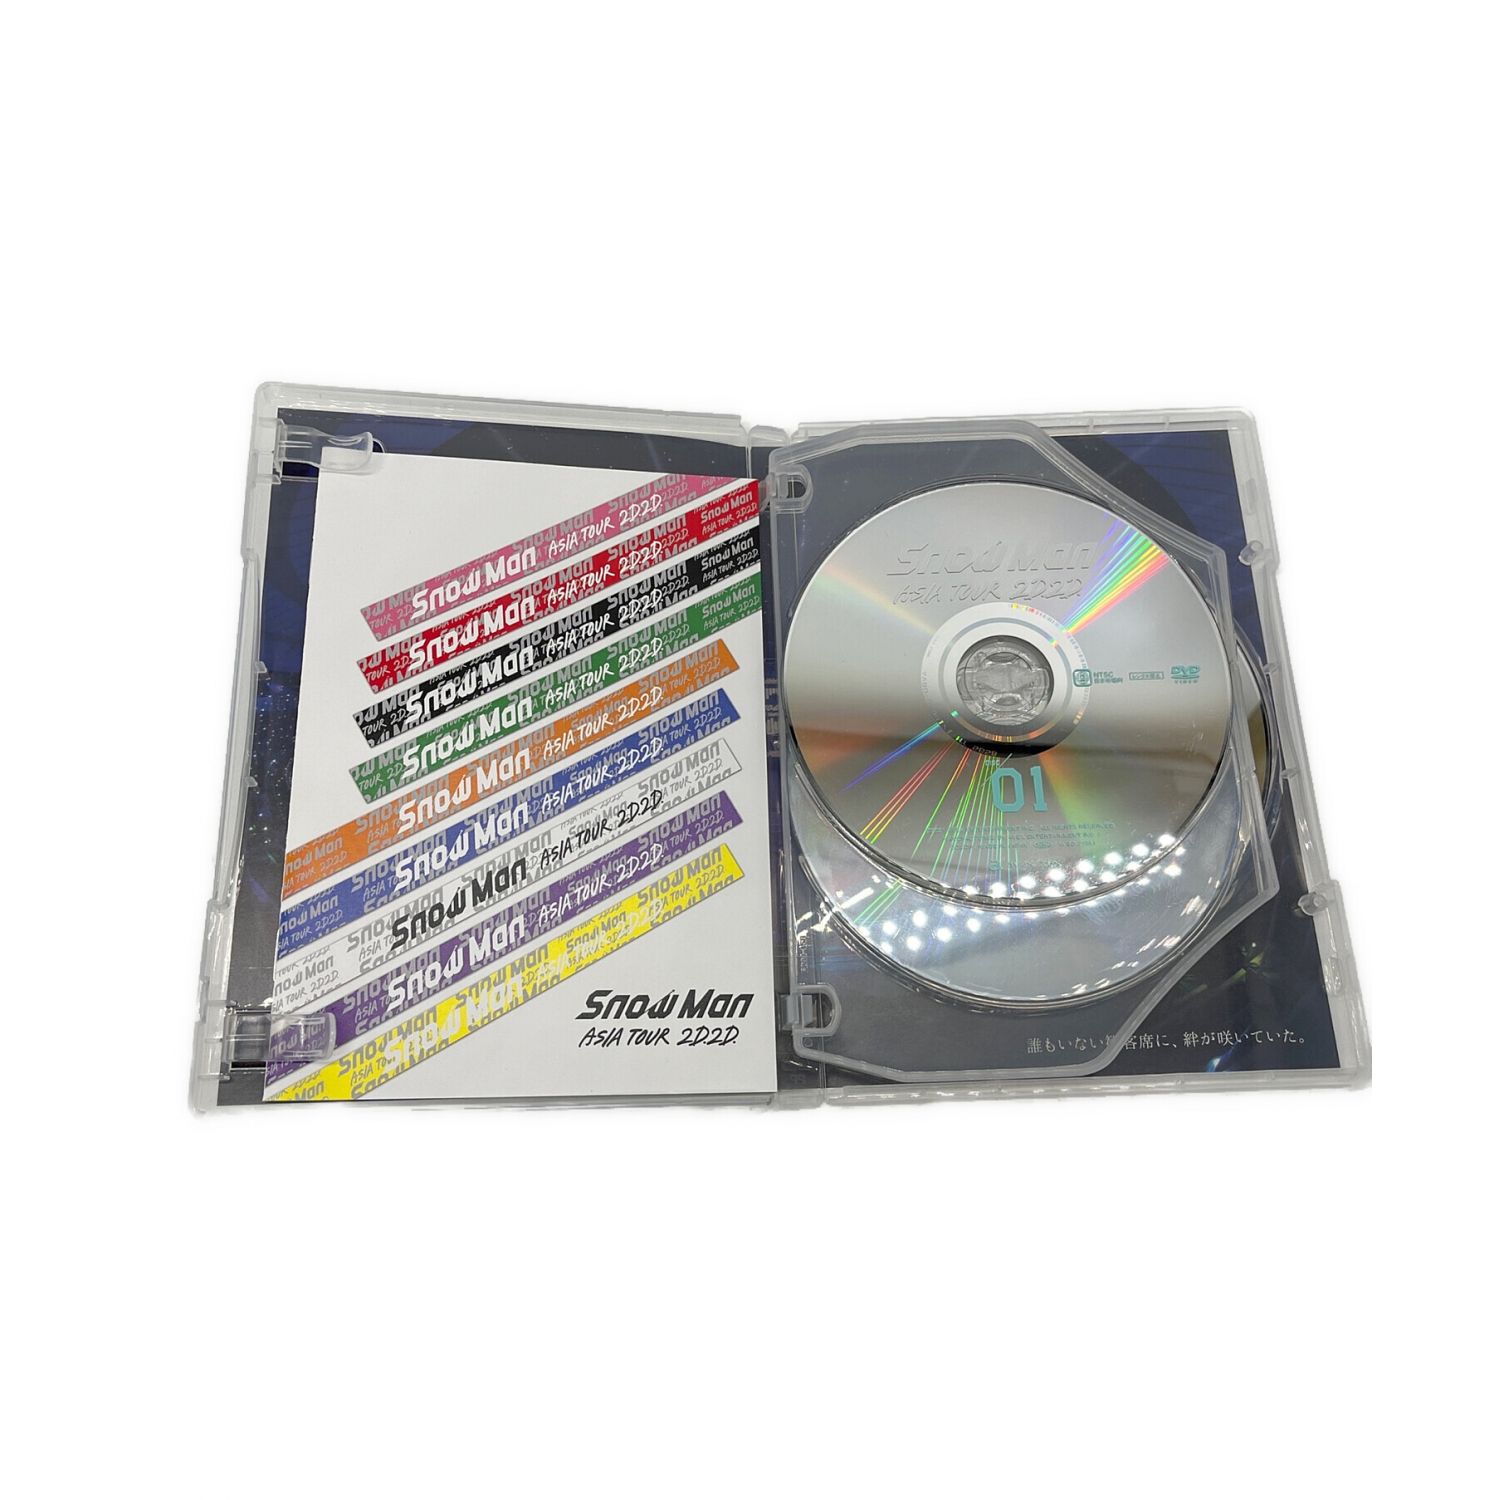 SNOW MAN (スノーマン) DVD 通常盤初回仕様 銀テープ付き ASIA 